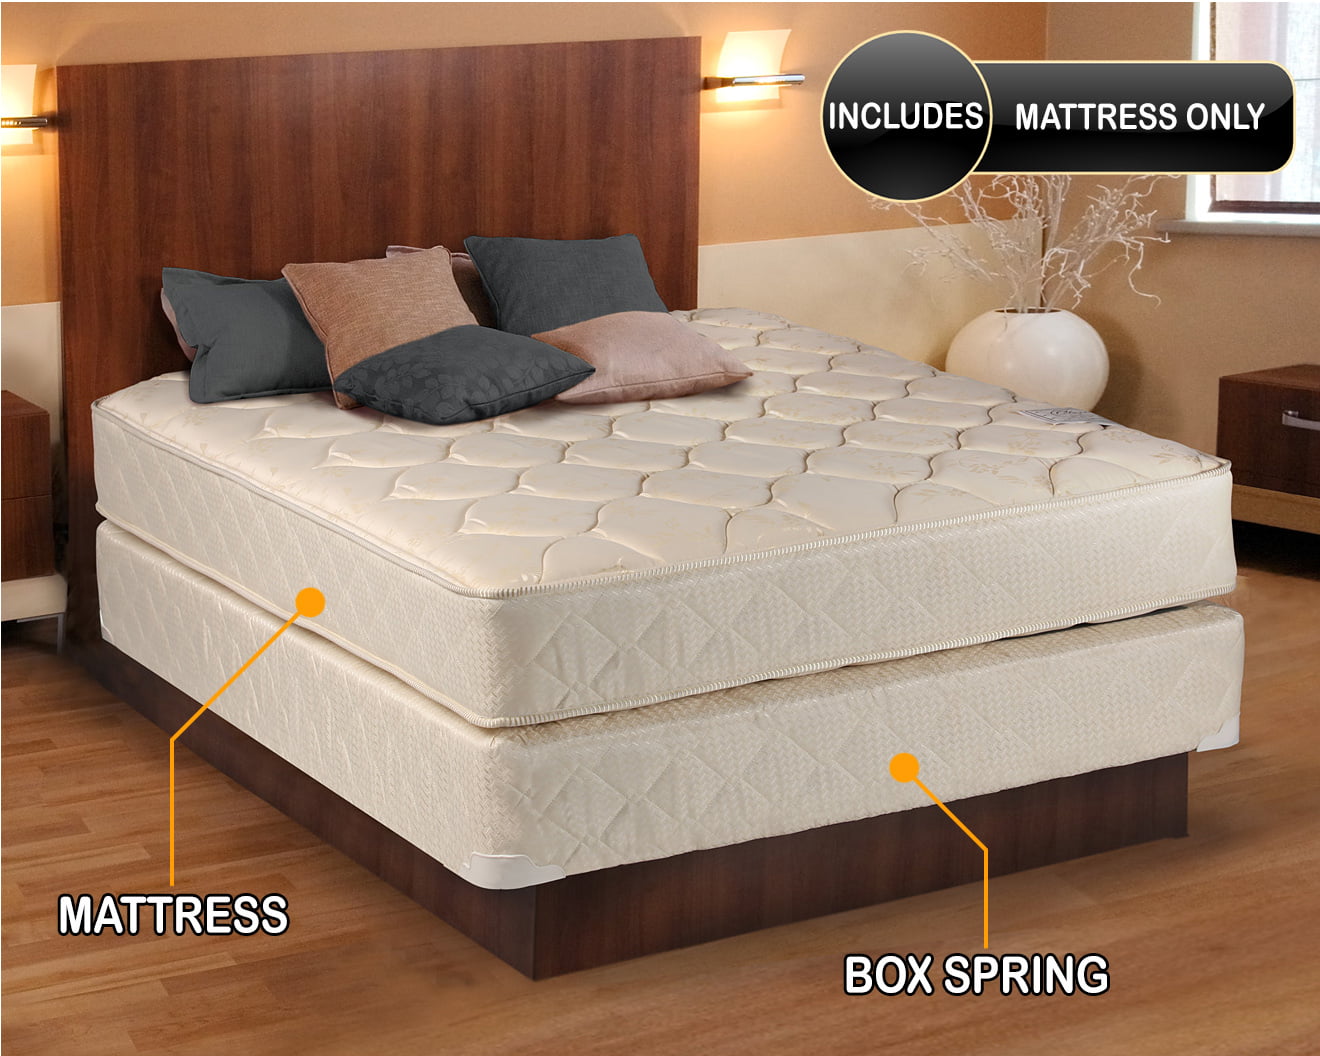 twin mattress and box spring set costco